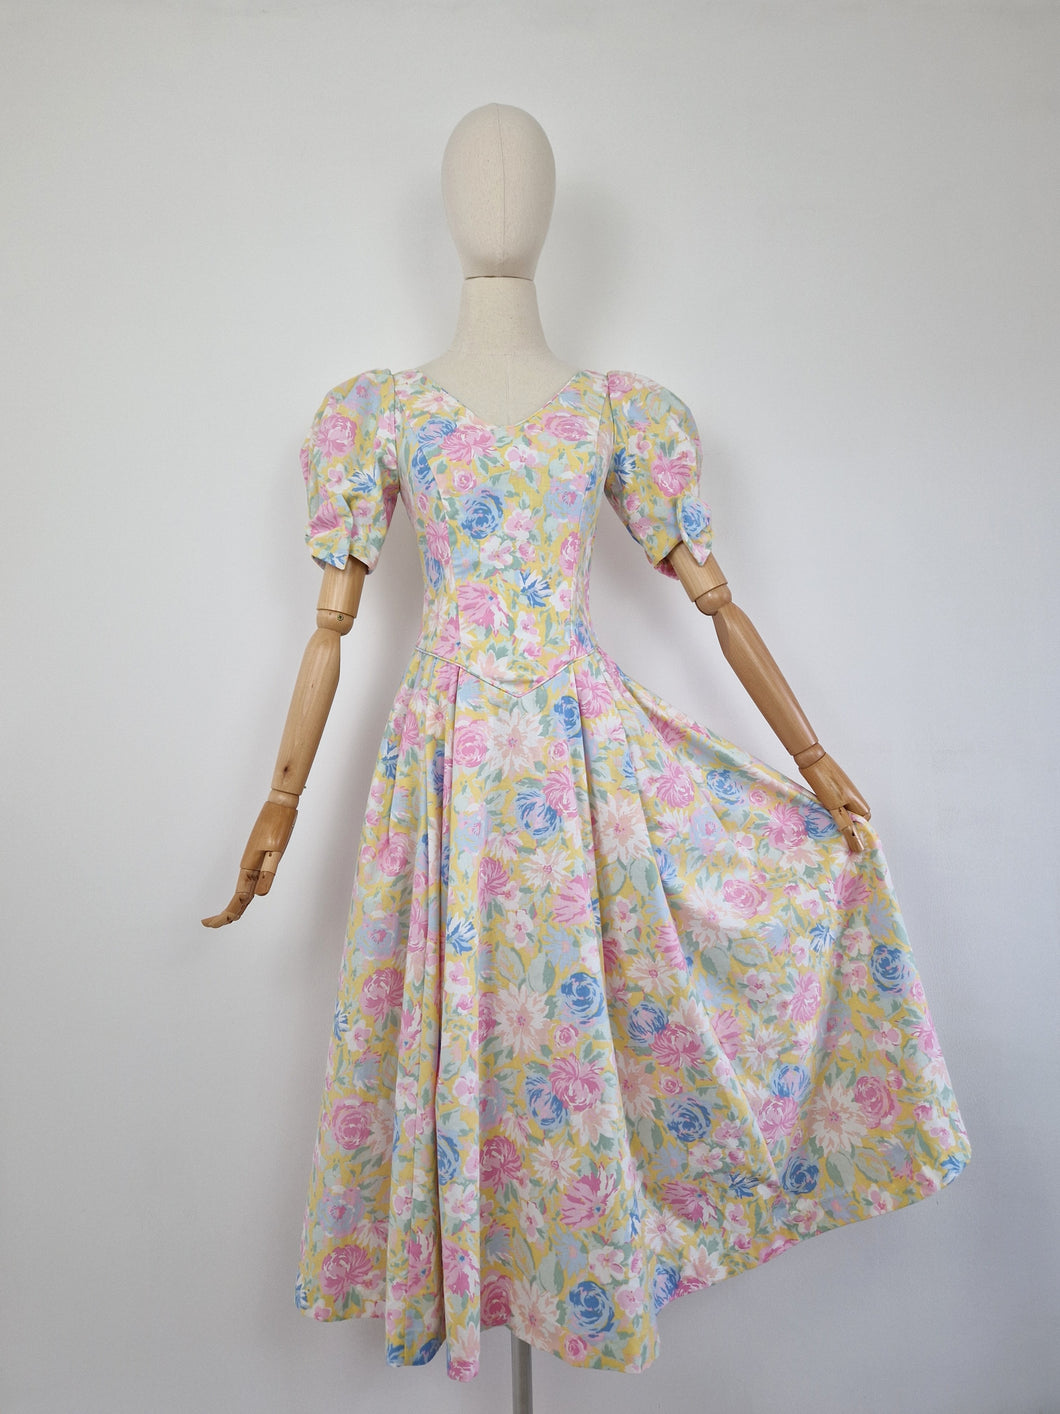 Vintage Laura Ashley pastel ballgown dress